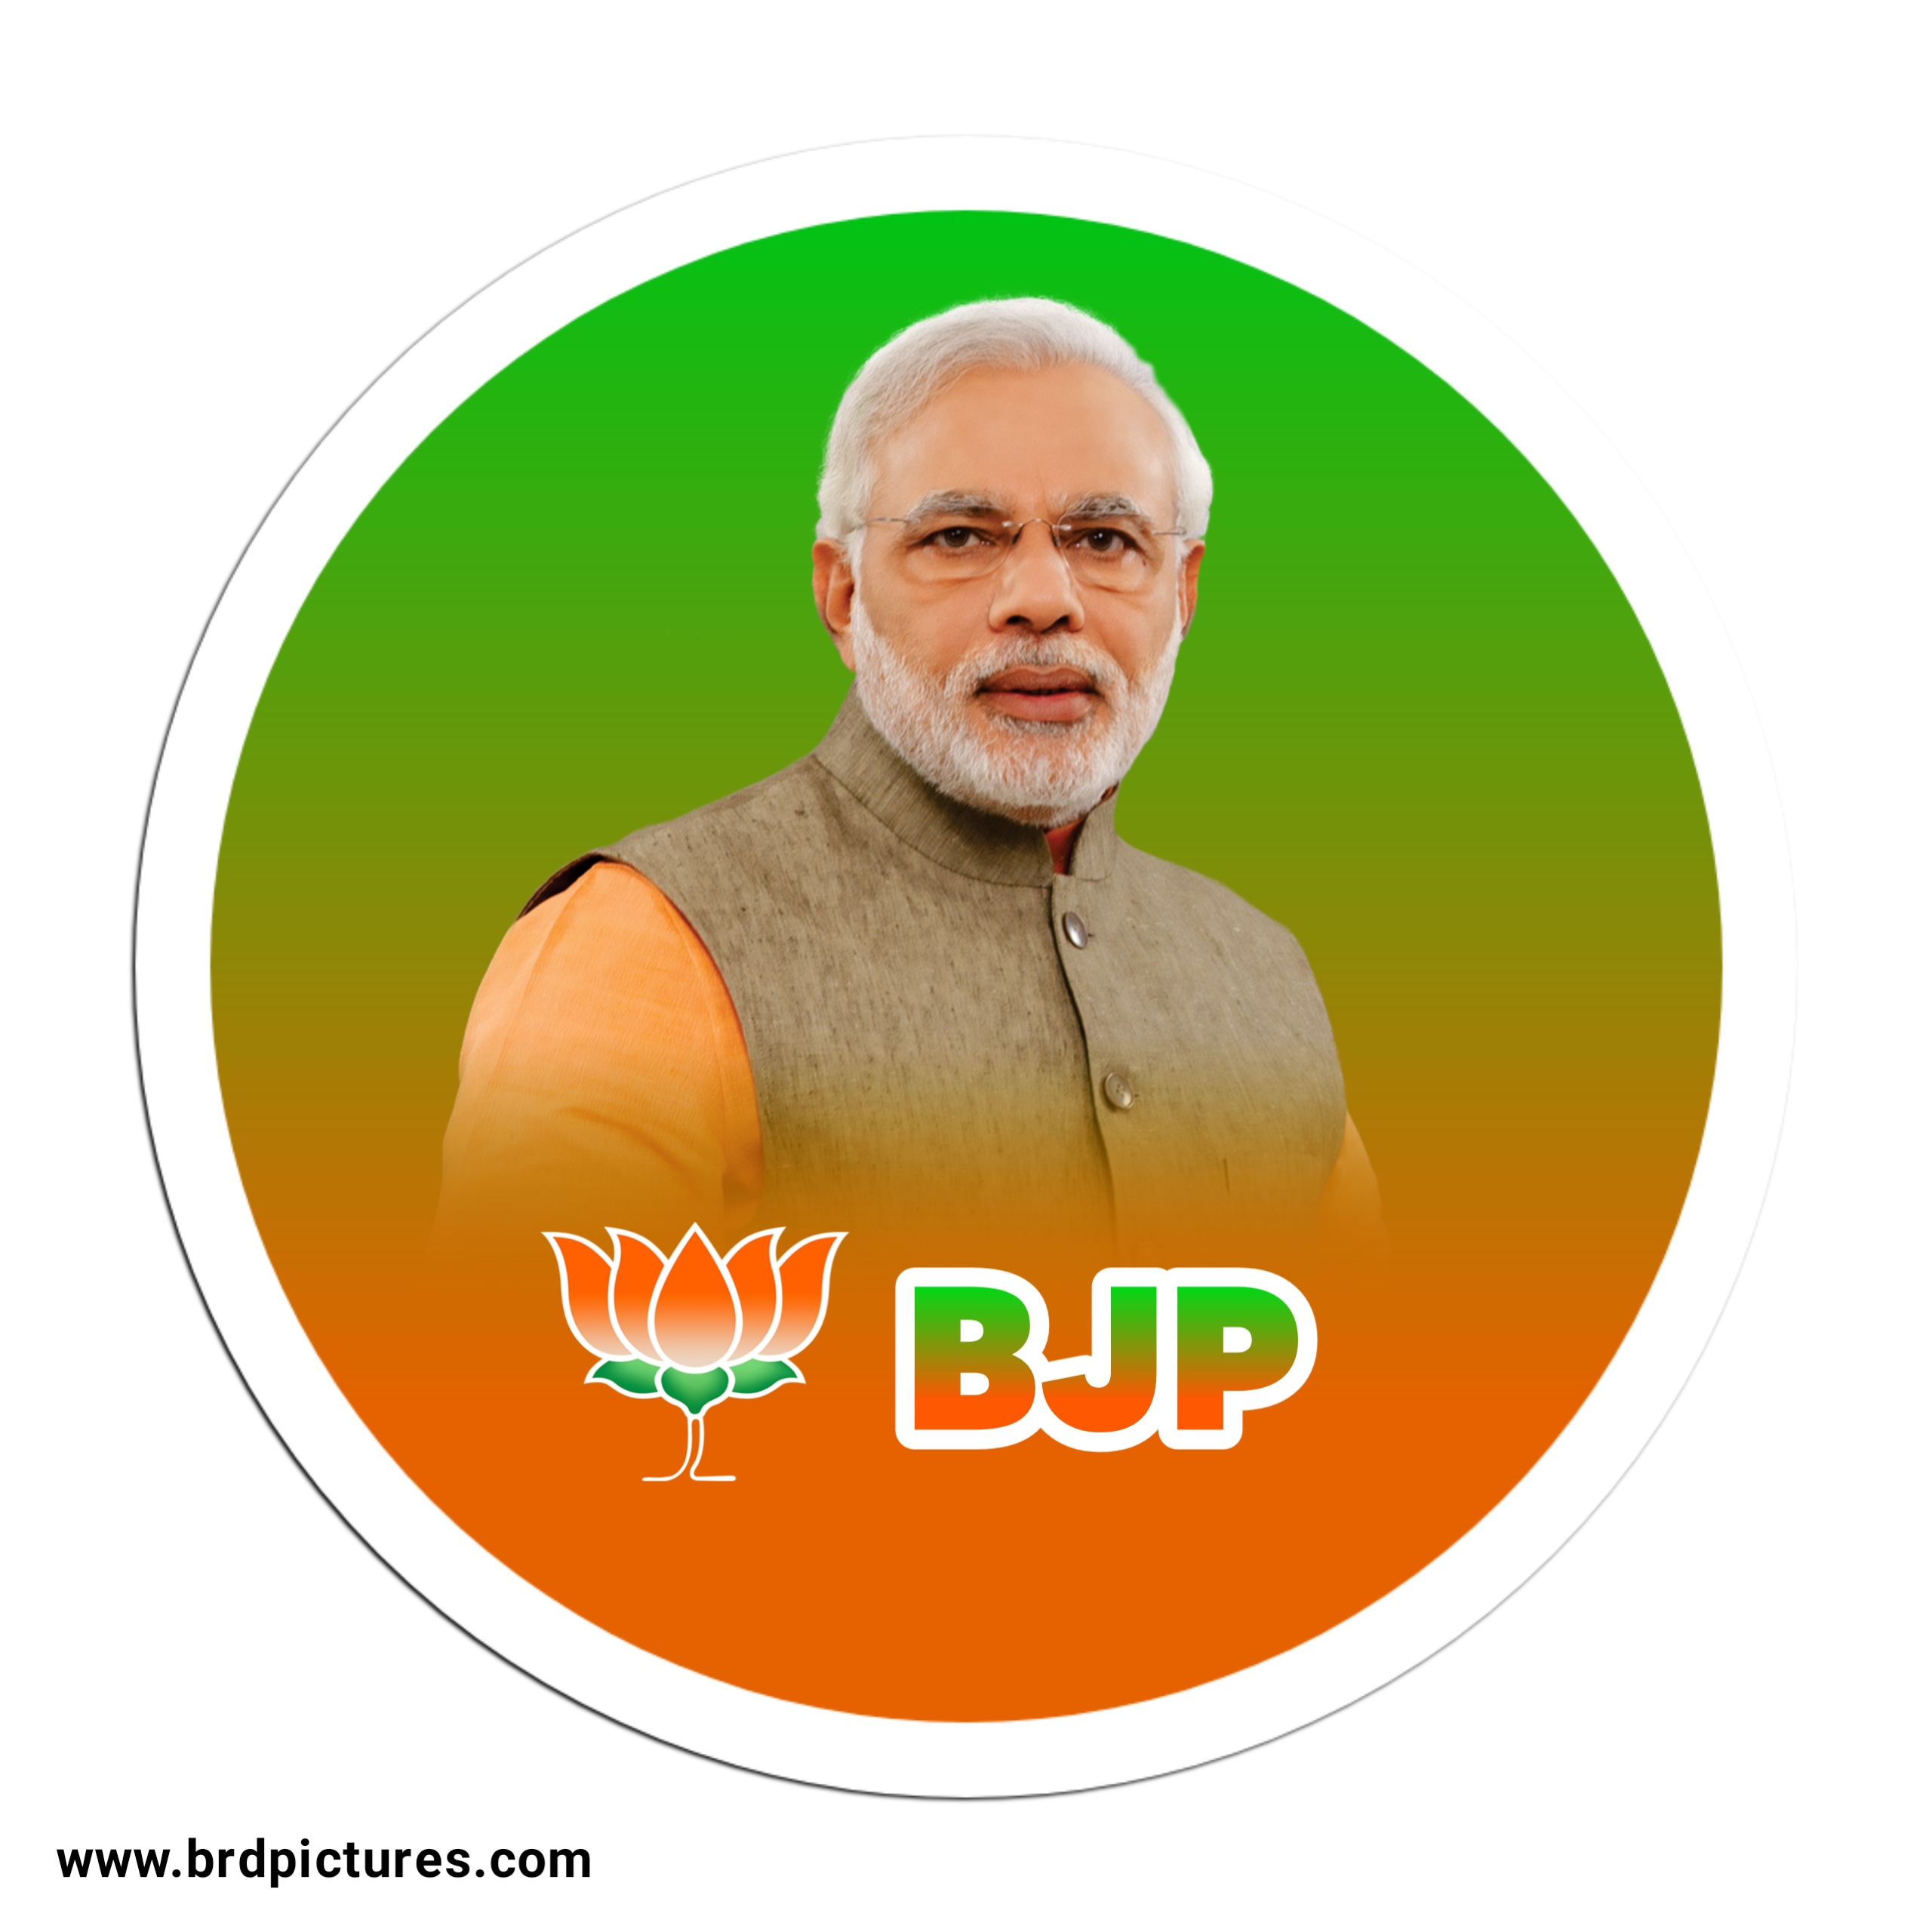 Bjp Logo Image Download With Kamal